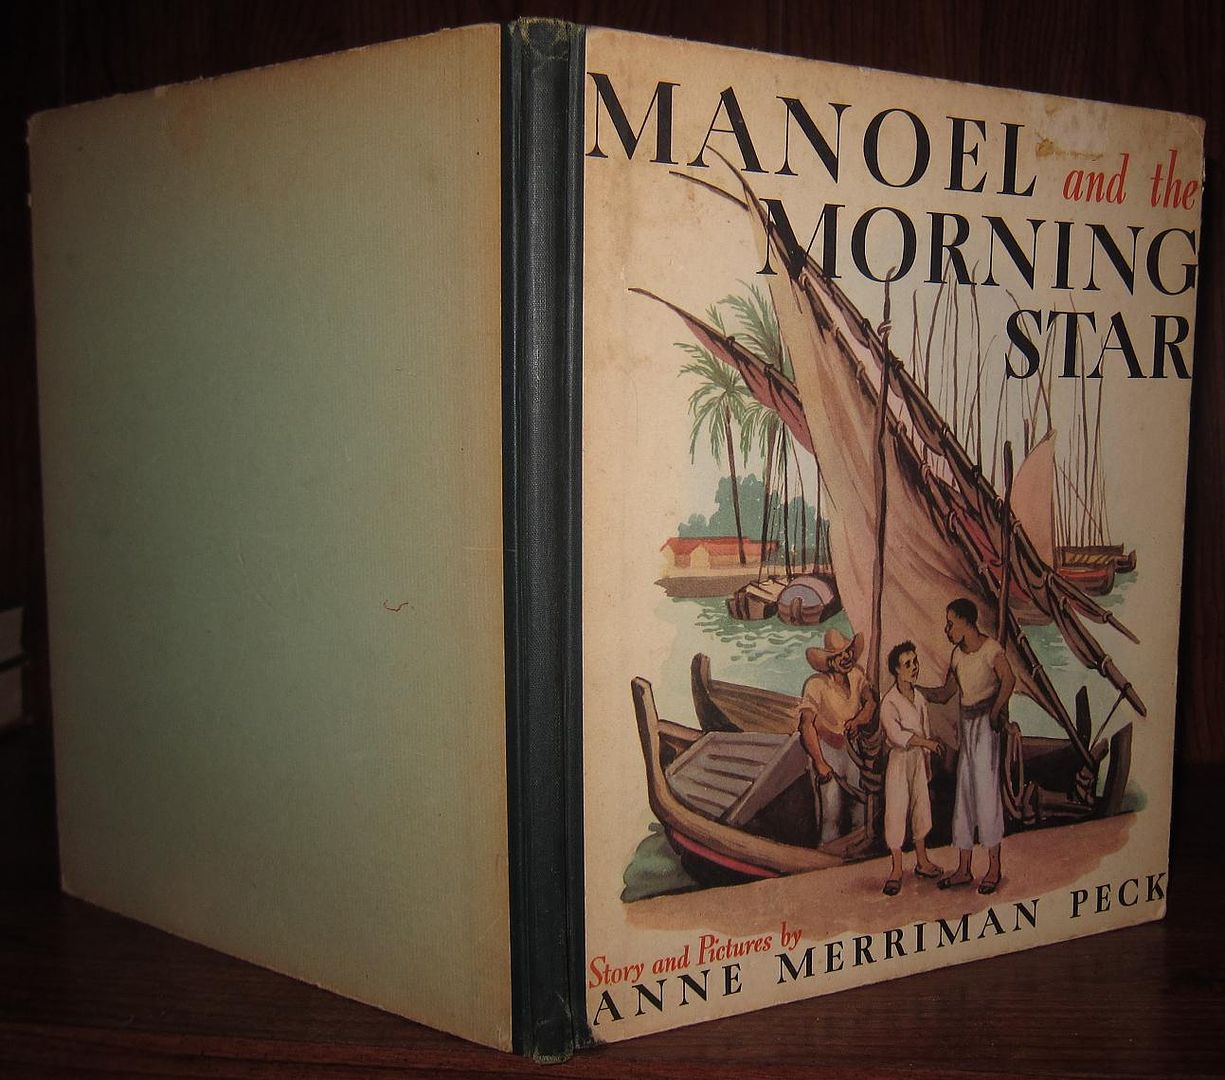 PECK, ANNE MERRIMAN - Manoel and the Morning Star